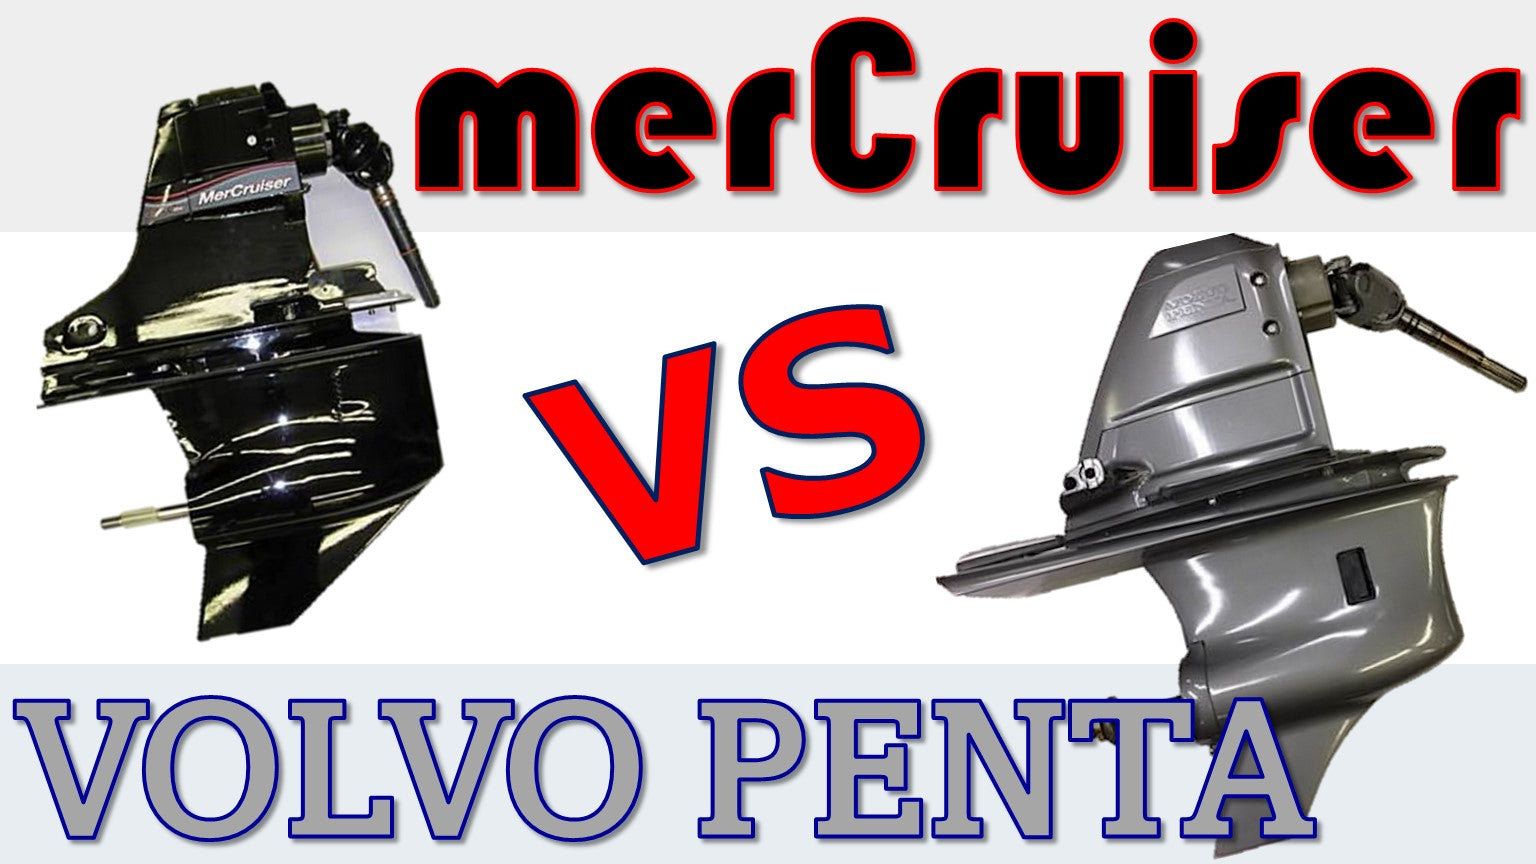 MerCruiser vs Volvo Penta Inboard/Outboards